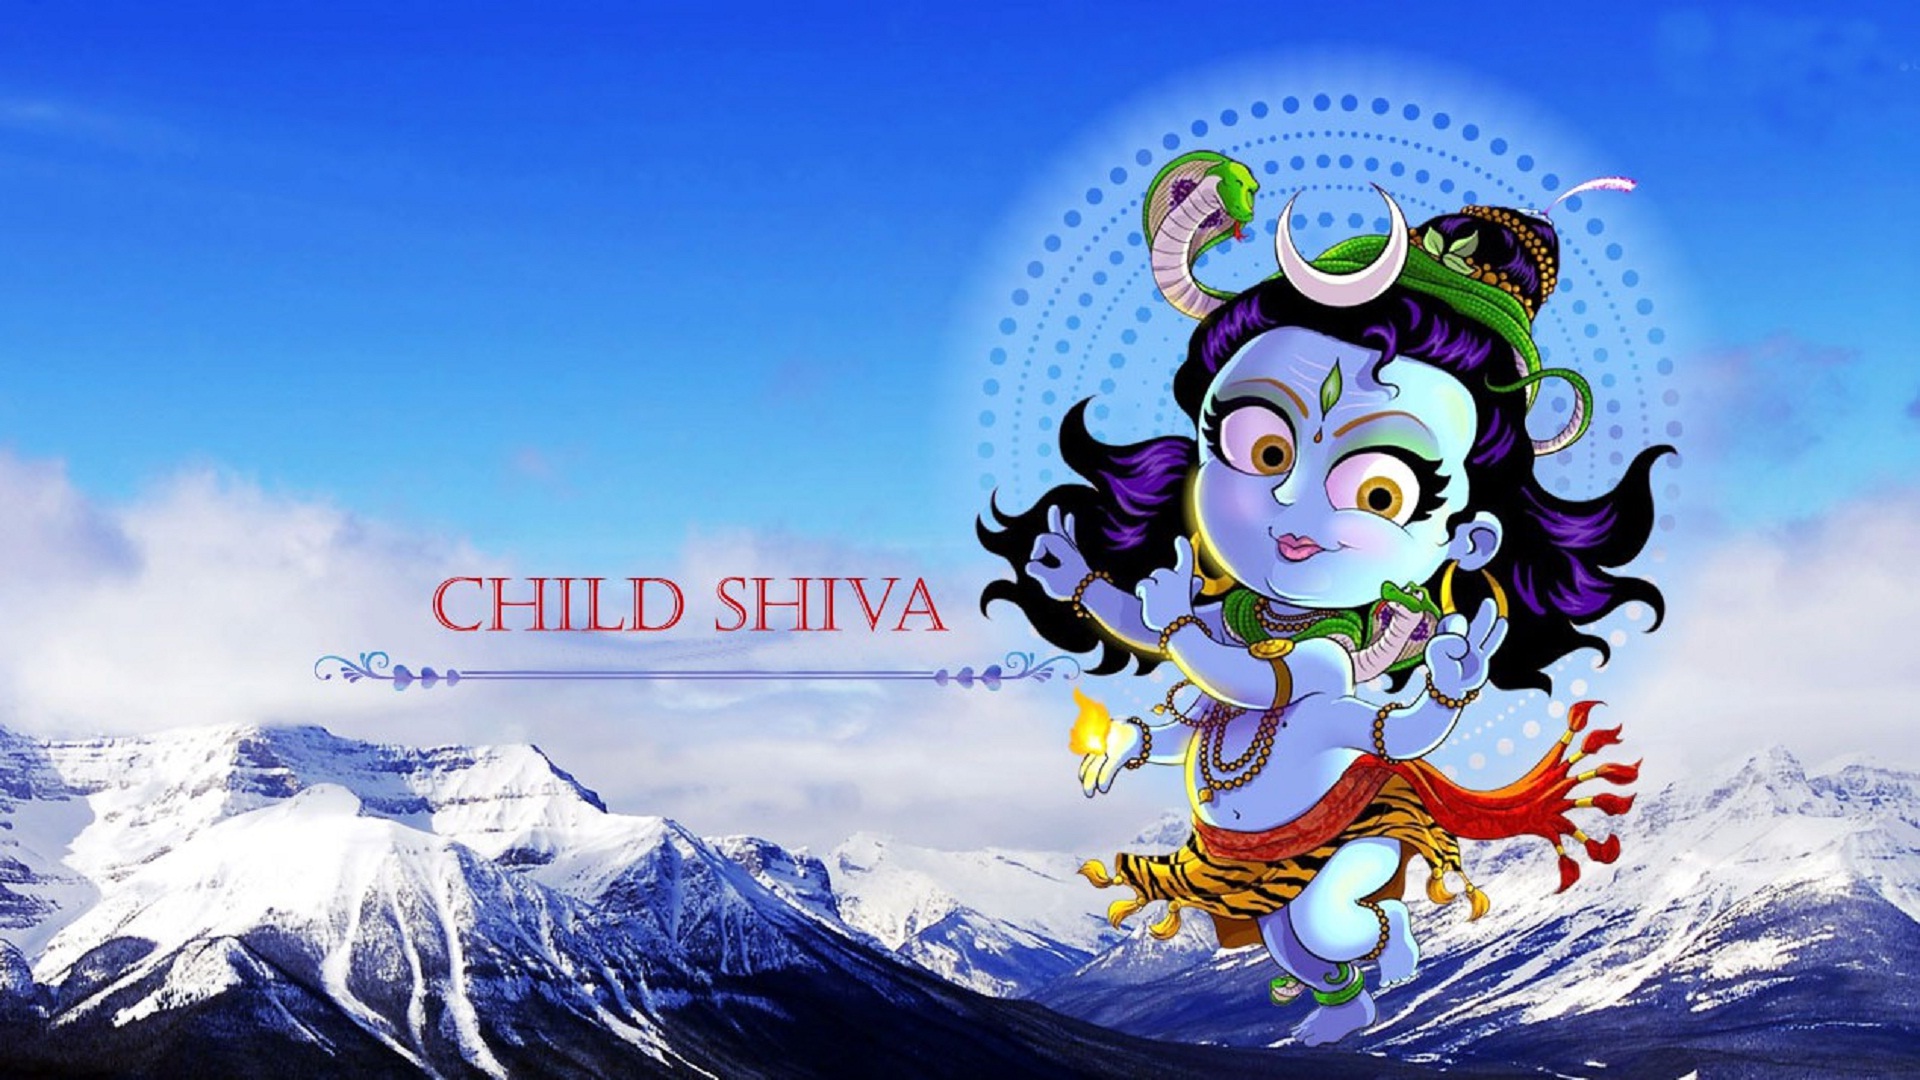 Child Shiva Hd Wallpapers